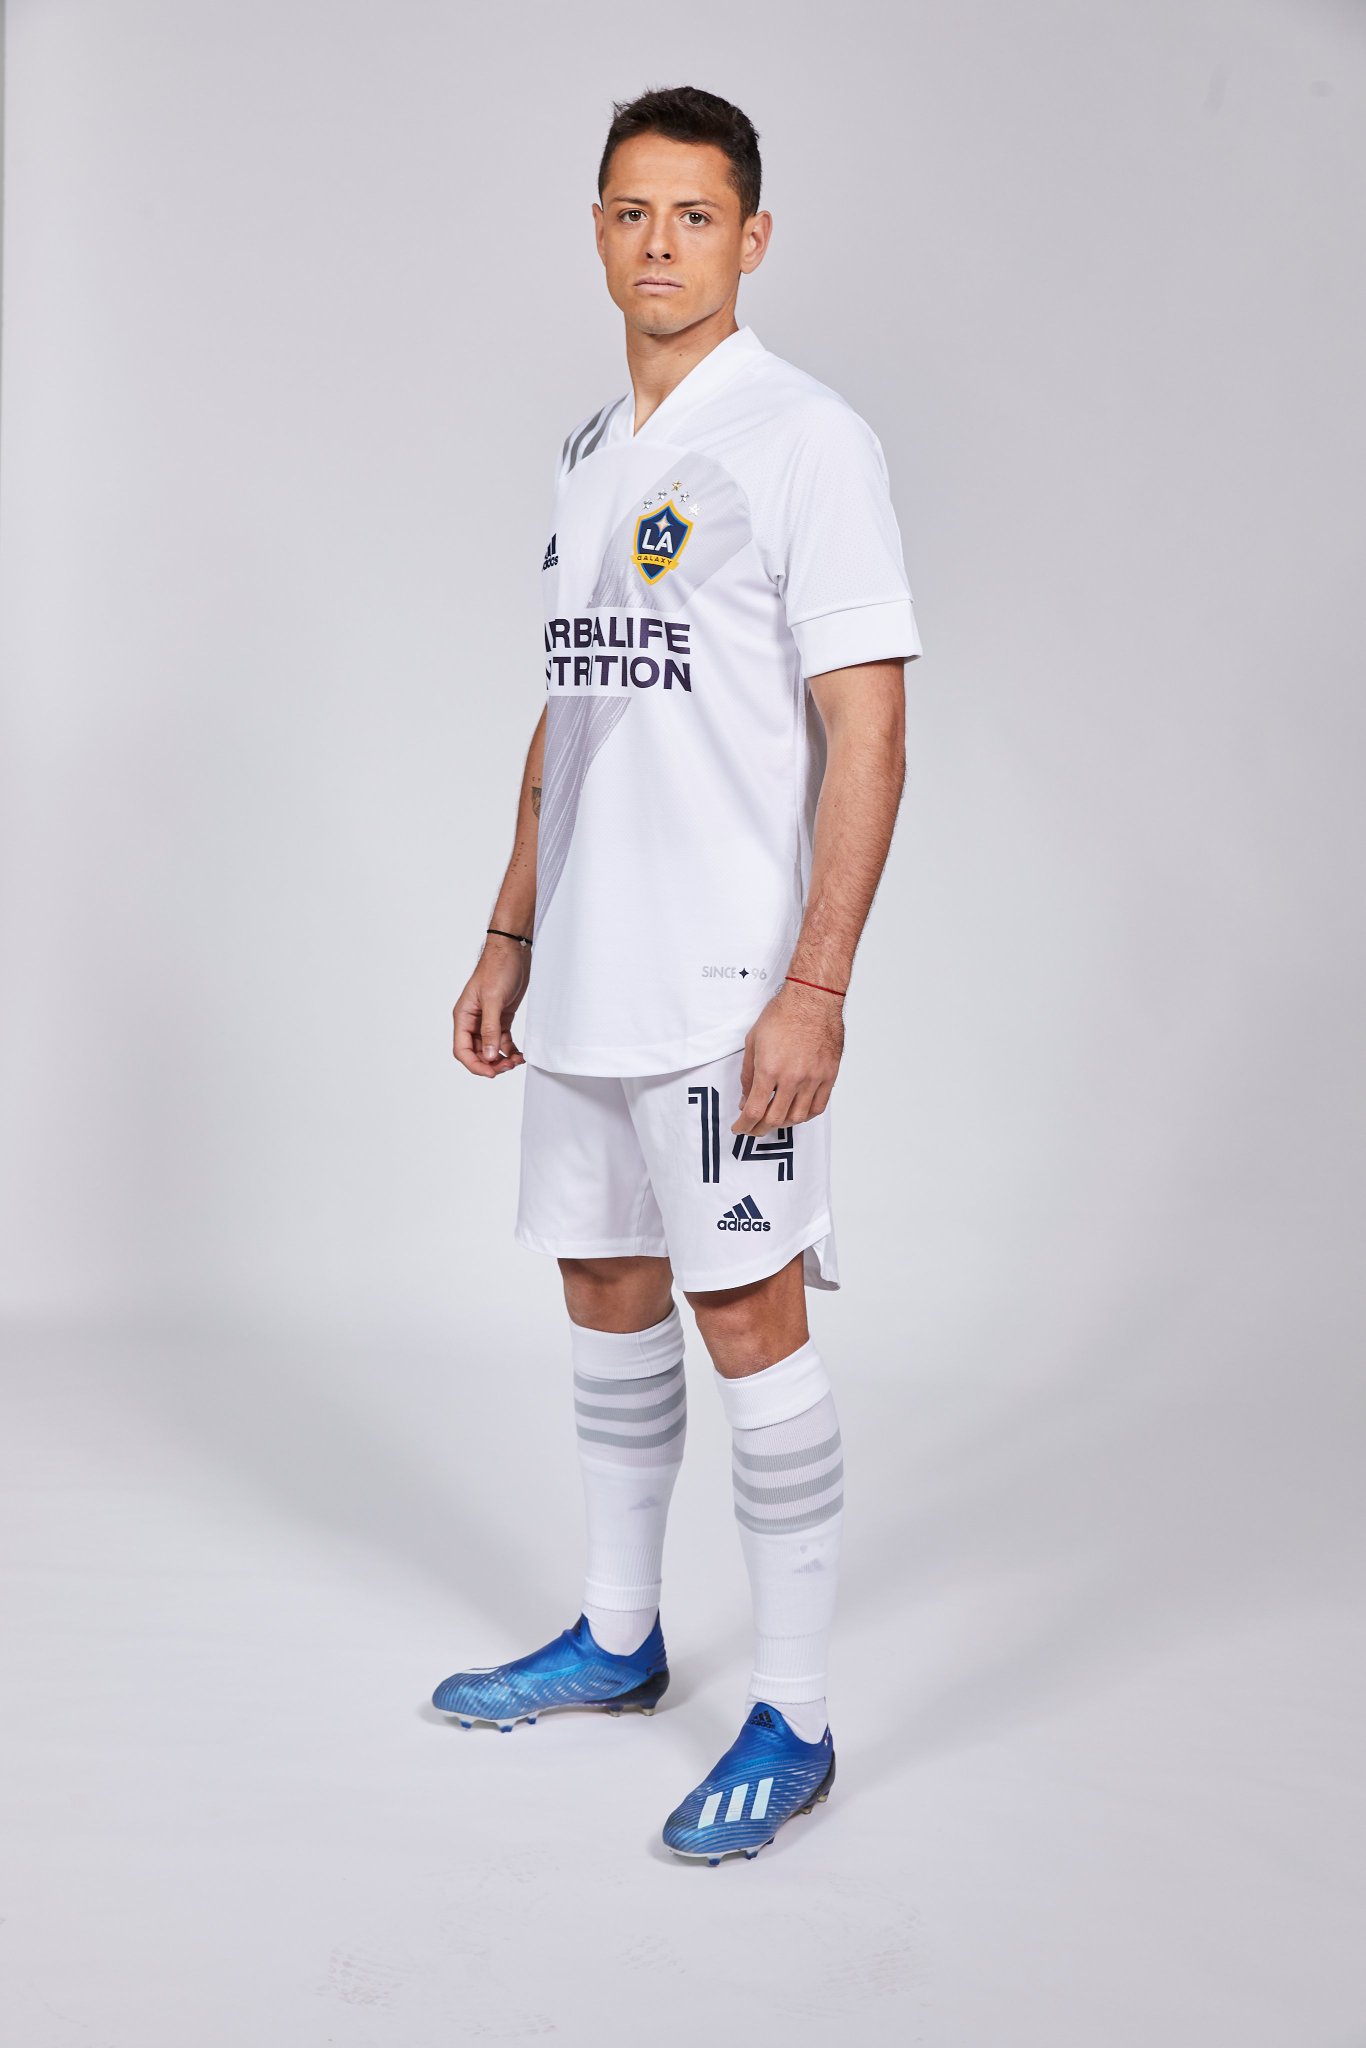 LA Galaxy 2020 Adidas Home Kit - 19/20 Kits - Football shirt blog